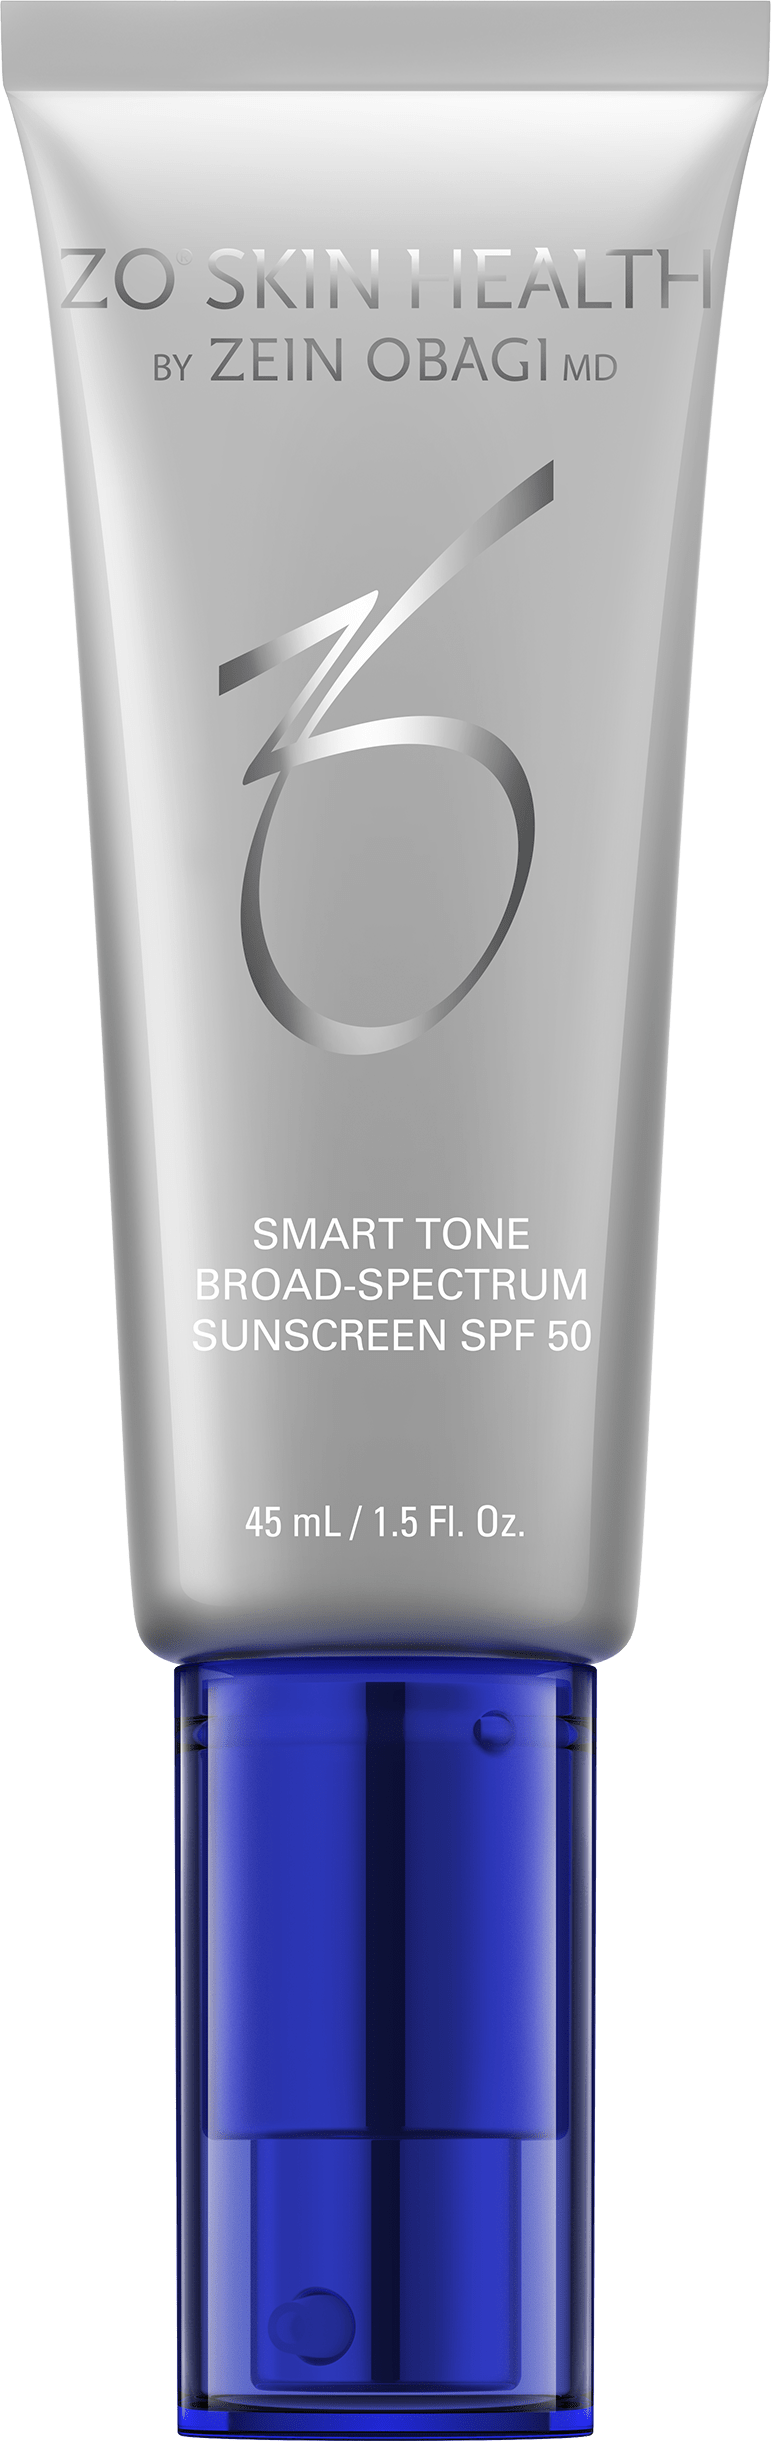 ZO Smart Tone Broad-Spectrum SPF 50